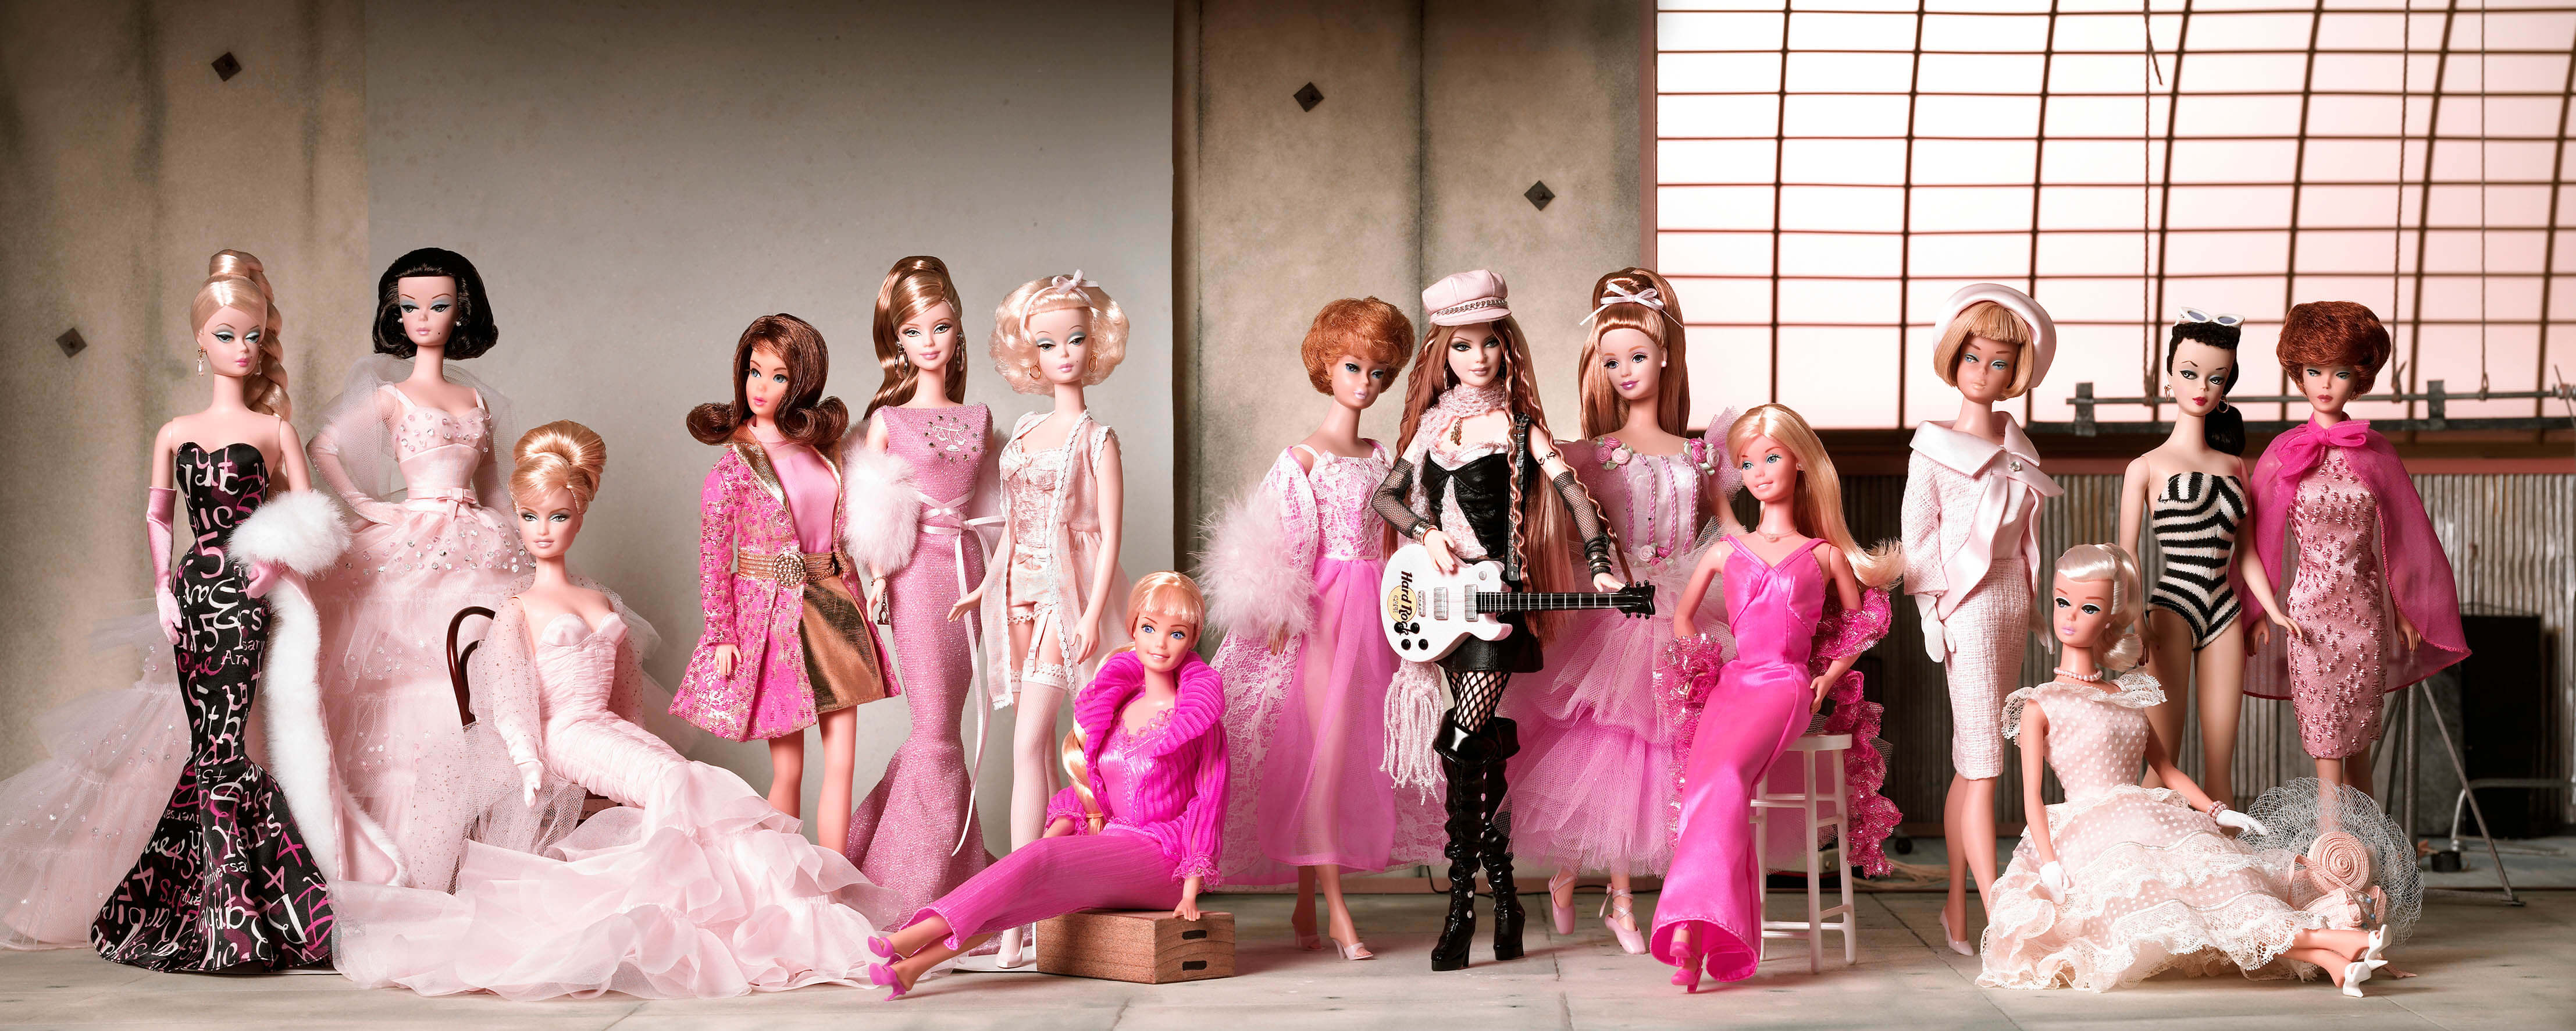 Barbie icona per mamme e bambine in mostra Barbie's evolution style (Collectors edition)